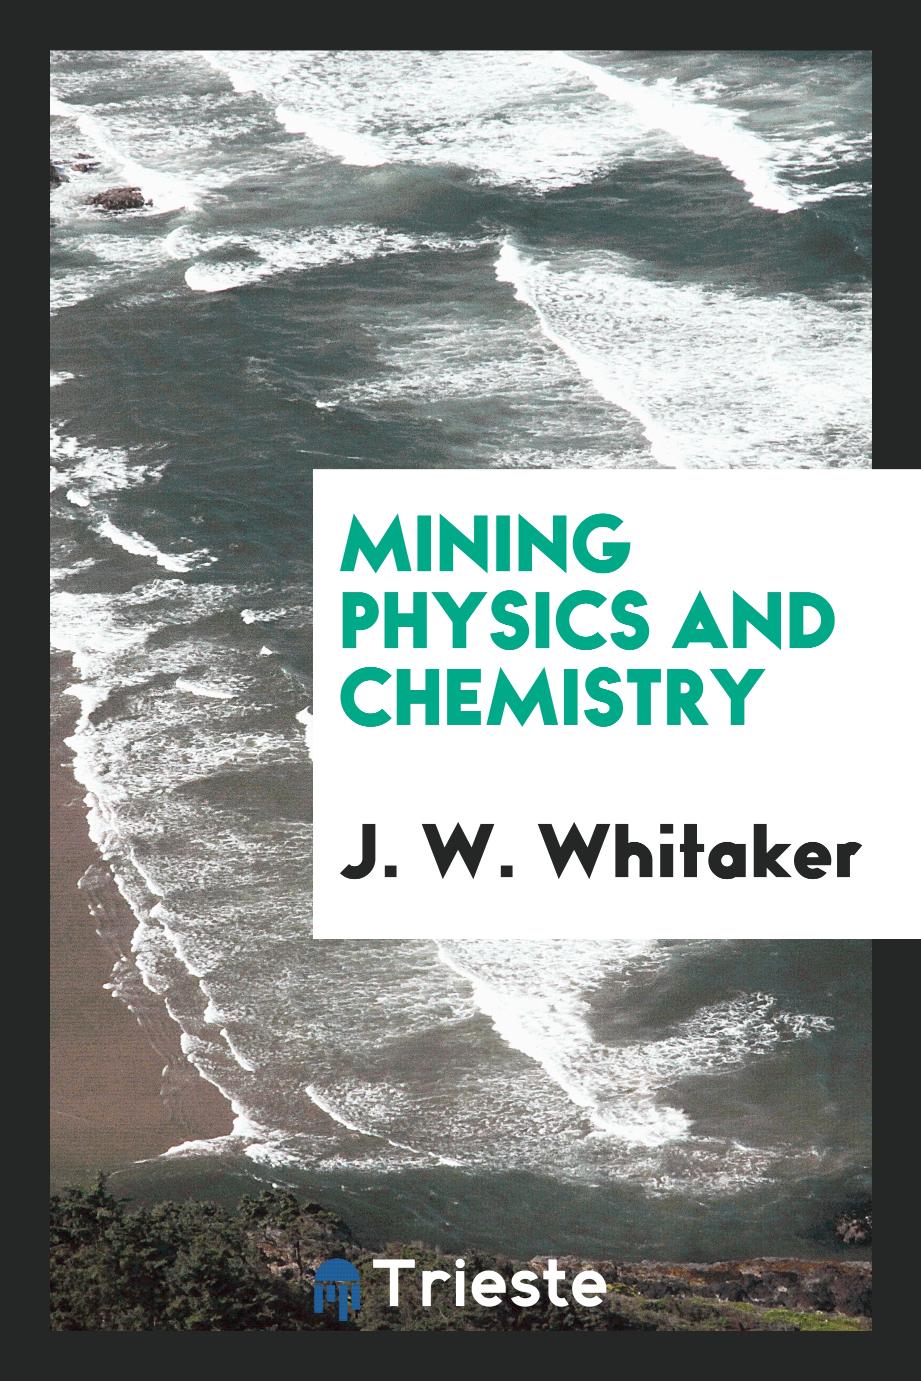 Mining physics and chemistry